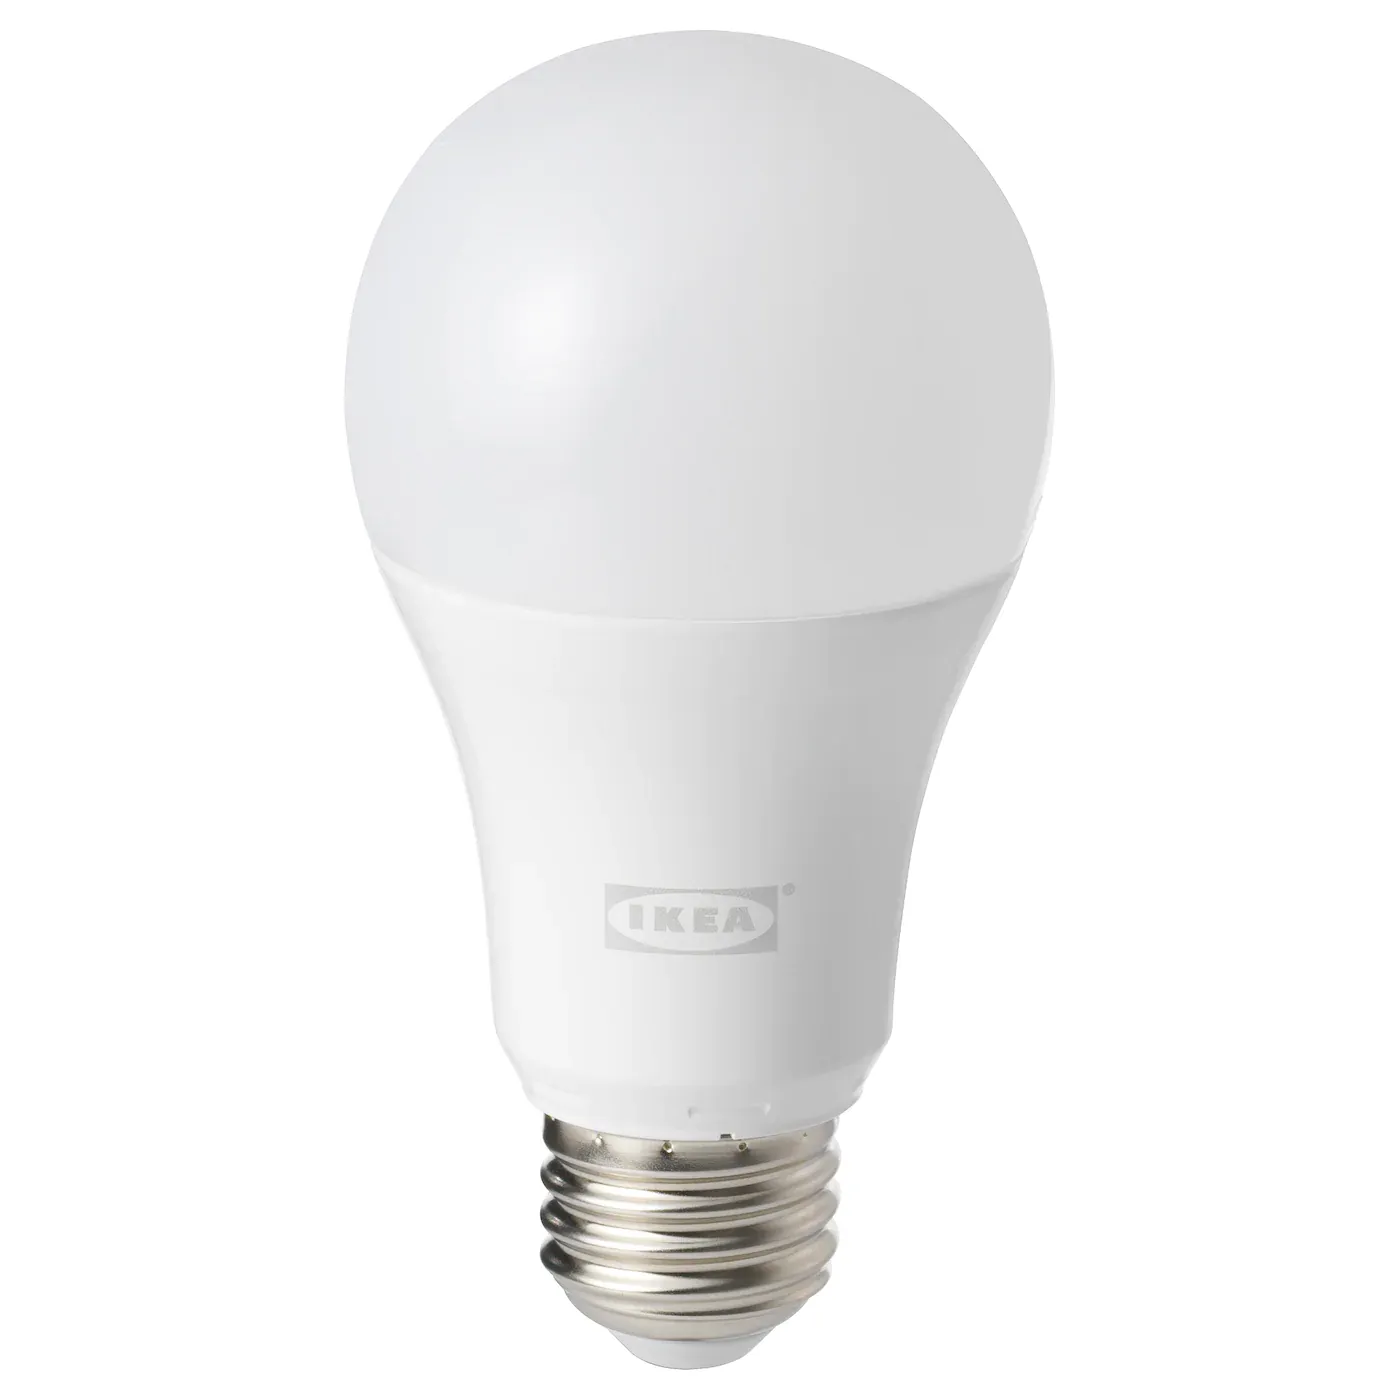 Tradfri LED bulb E27 1000 lumen, dimmable white spectrum opal white